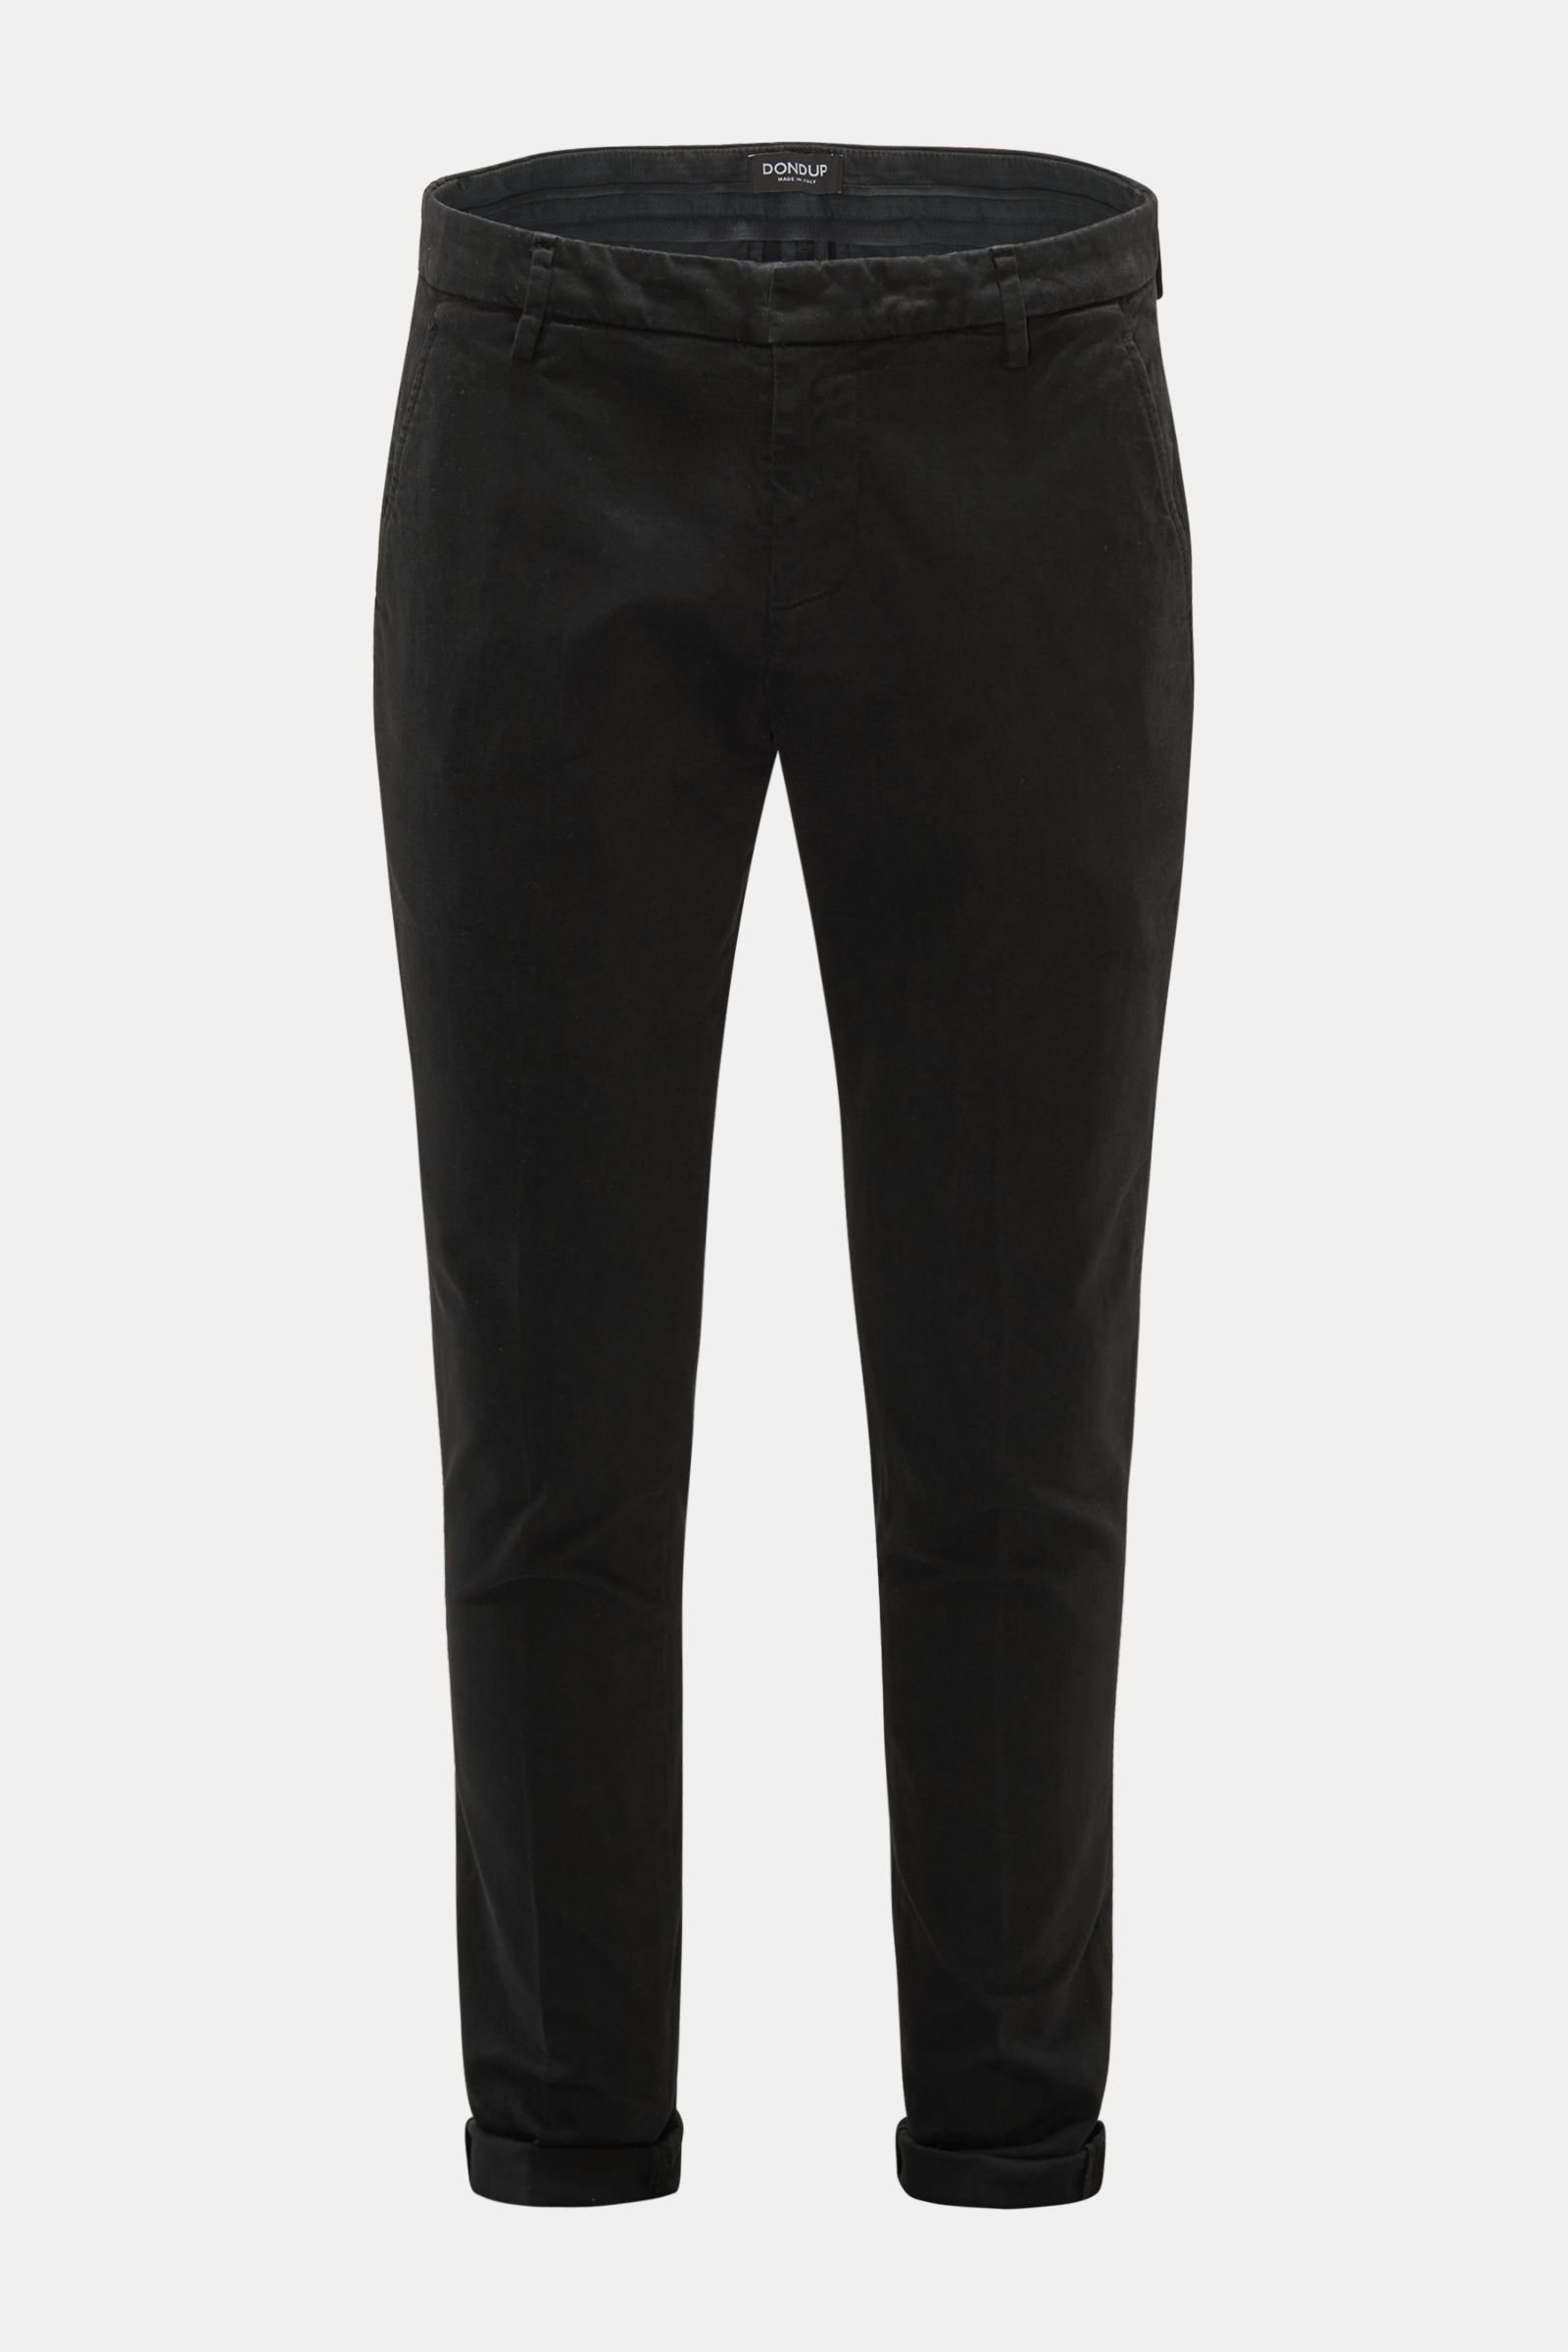 Fustian trousers 'Gaubert' black